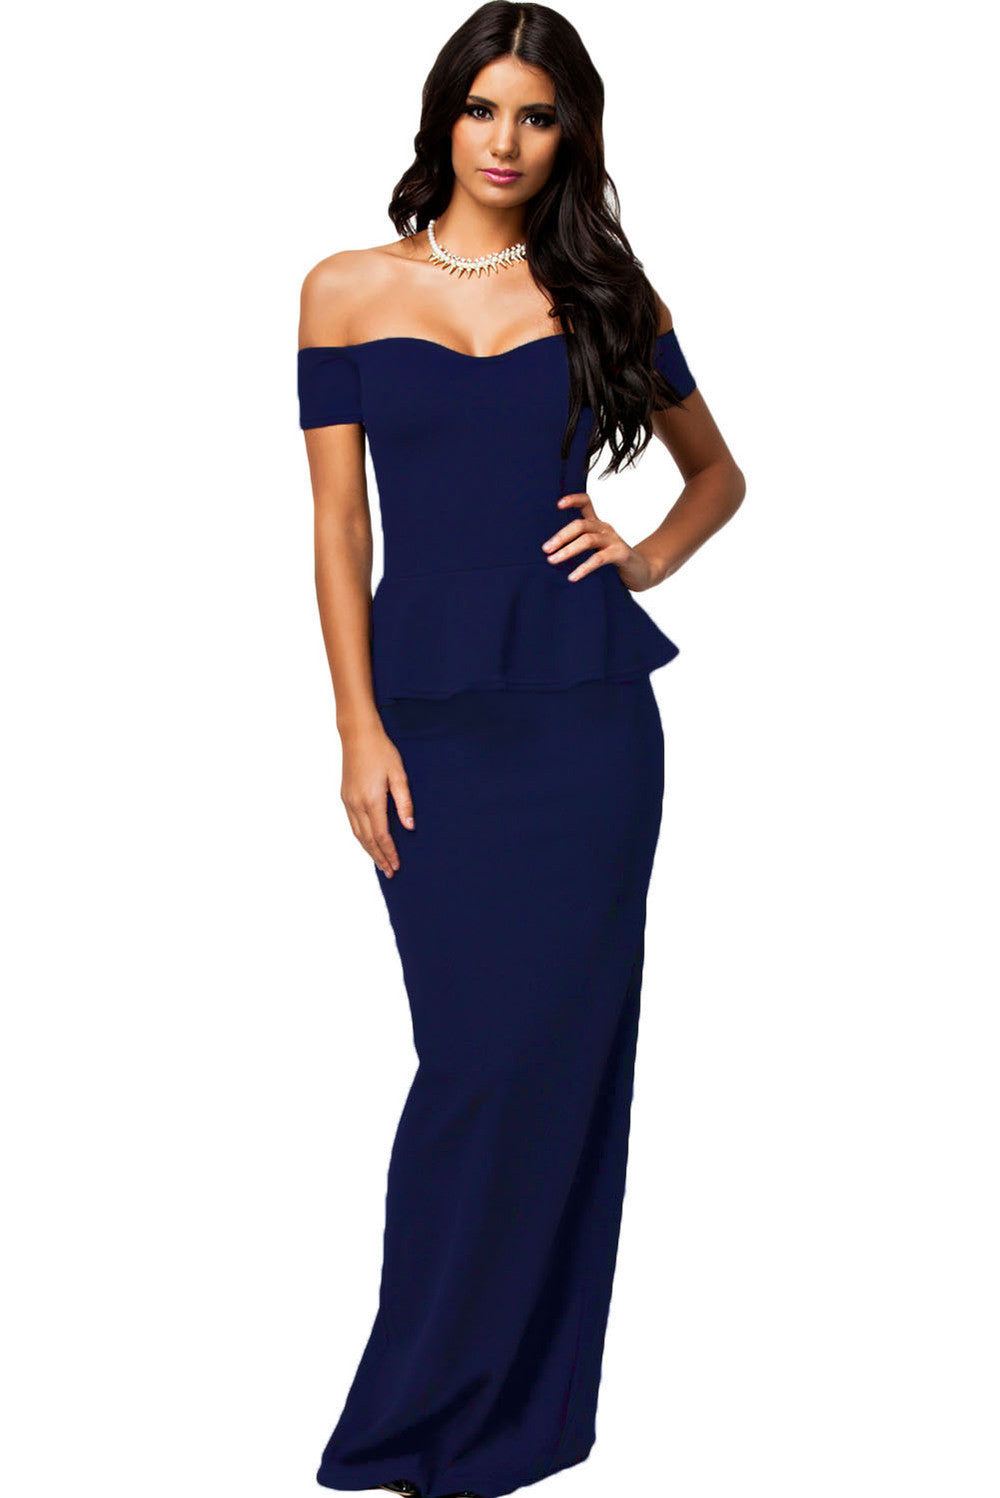 Women dress 3 colors Sexy Maxi Dress With Drop shoulder Long Dress LC6244 plus size M L XL XXL-Dollar Bargains Online Shopping Australia